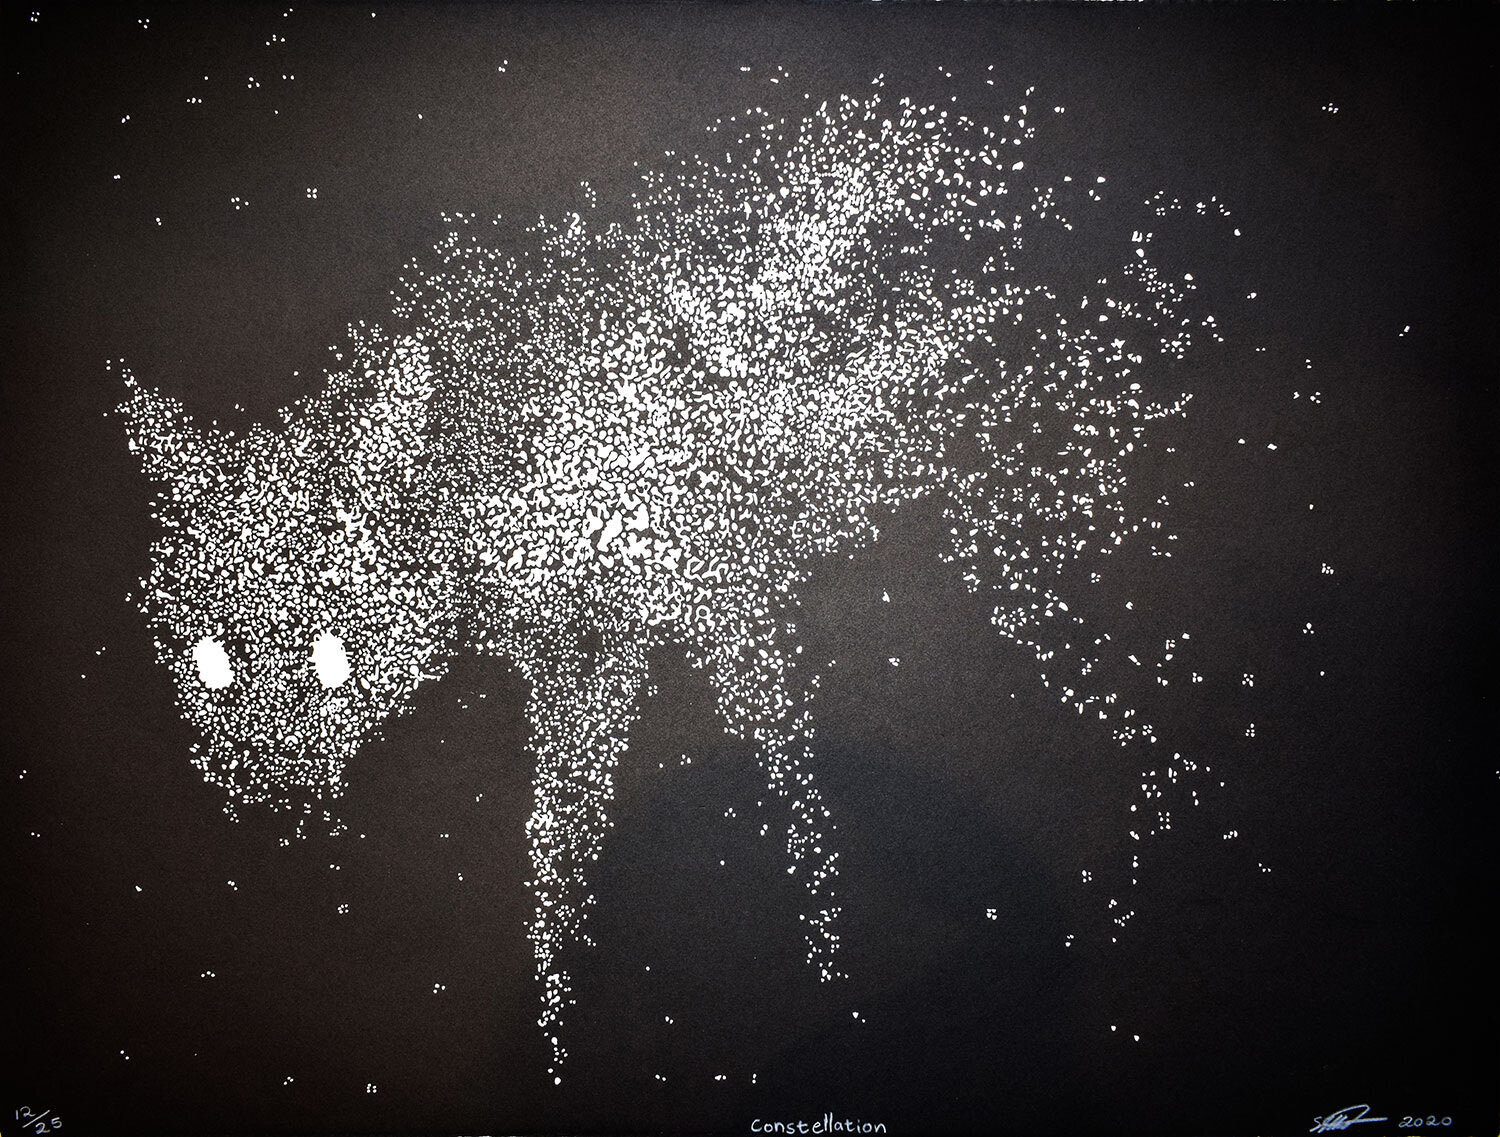 Simon+Attwood,+The+Constellation,+Single+colour+linocut,+760x570mm.jpg